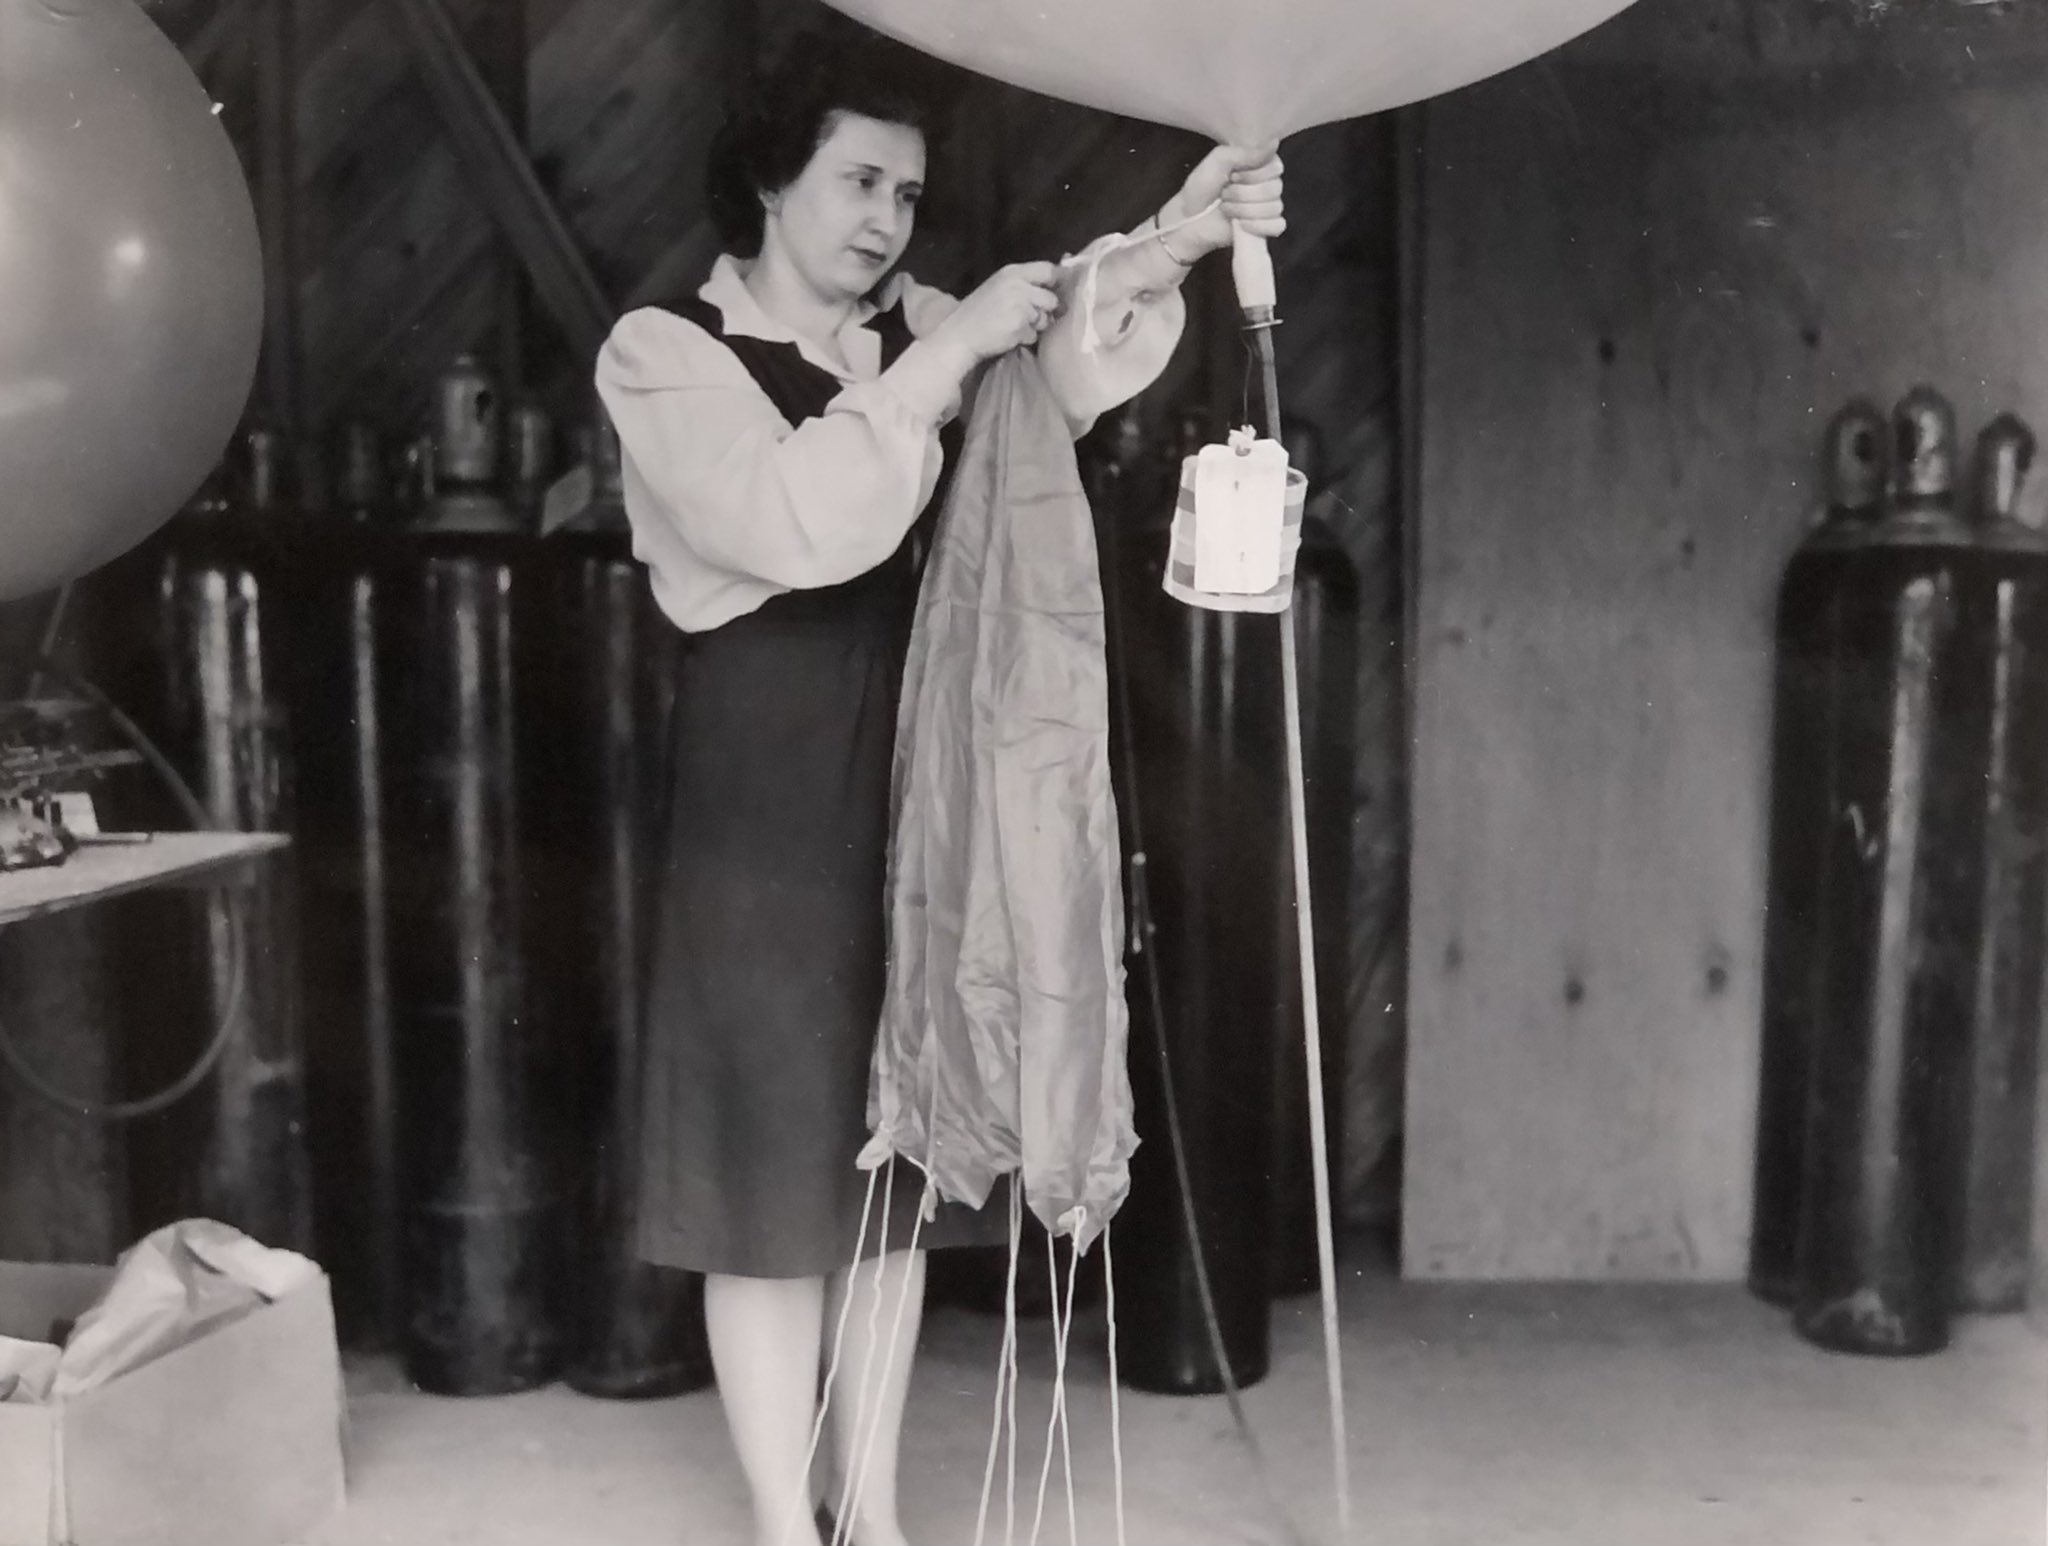  WW2 Woman Meteorologist tying off weather balloon